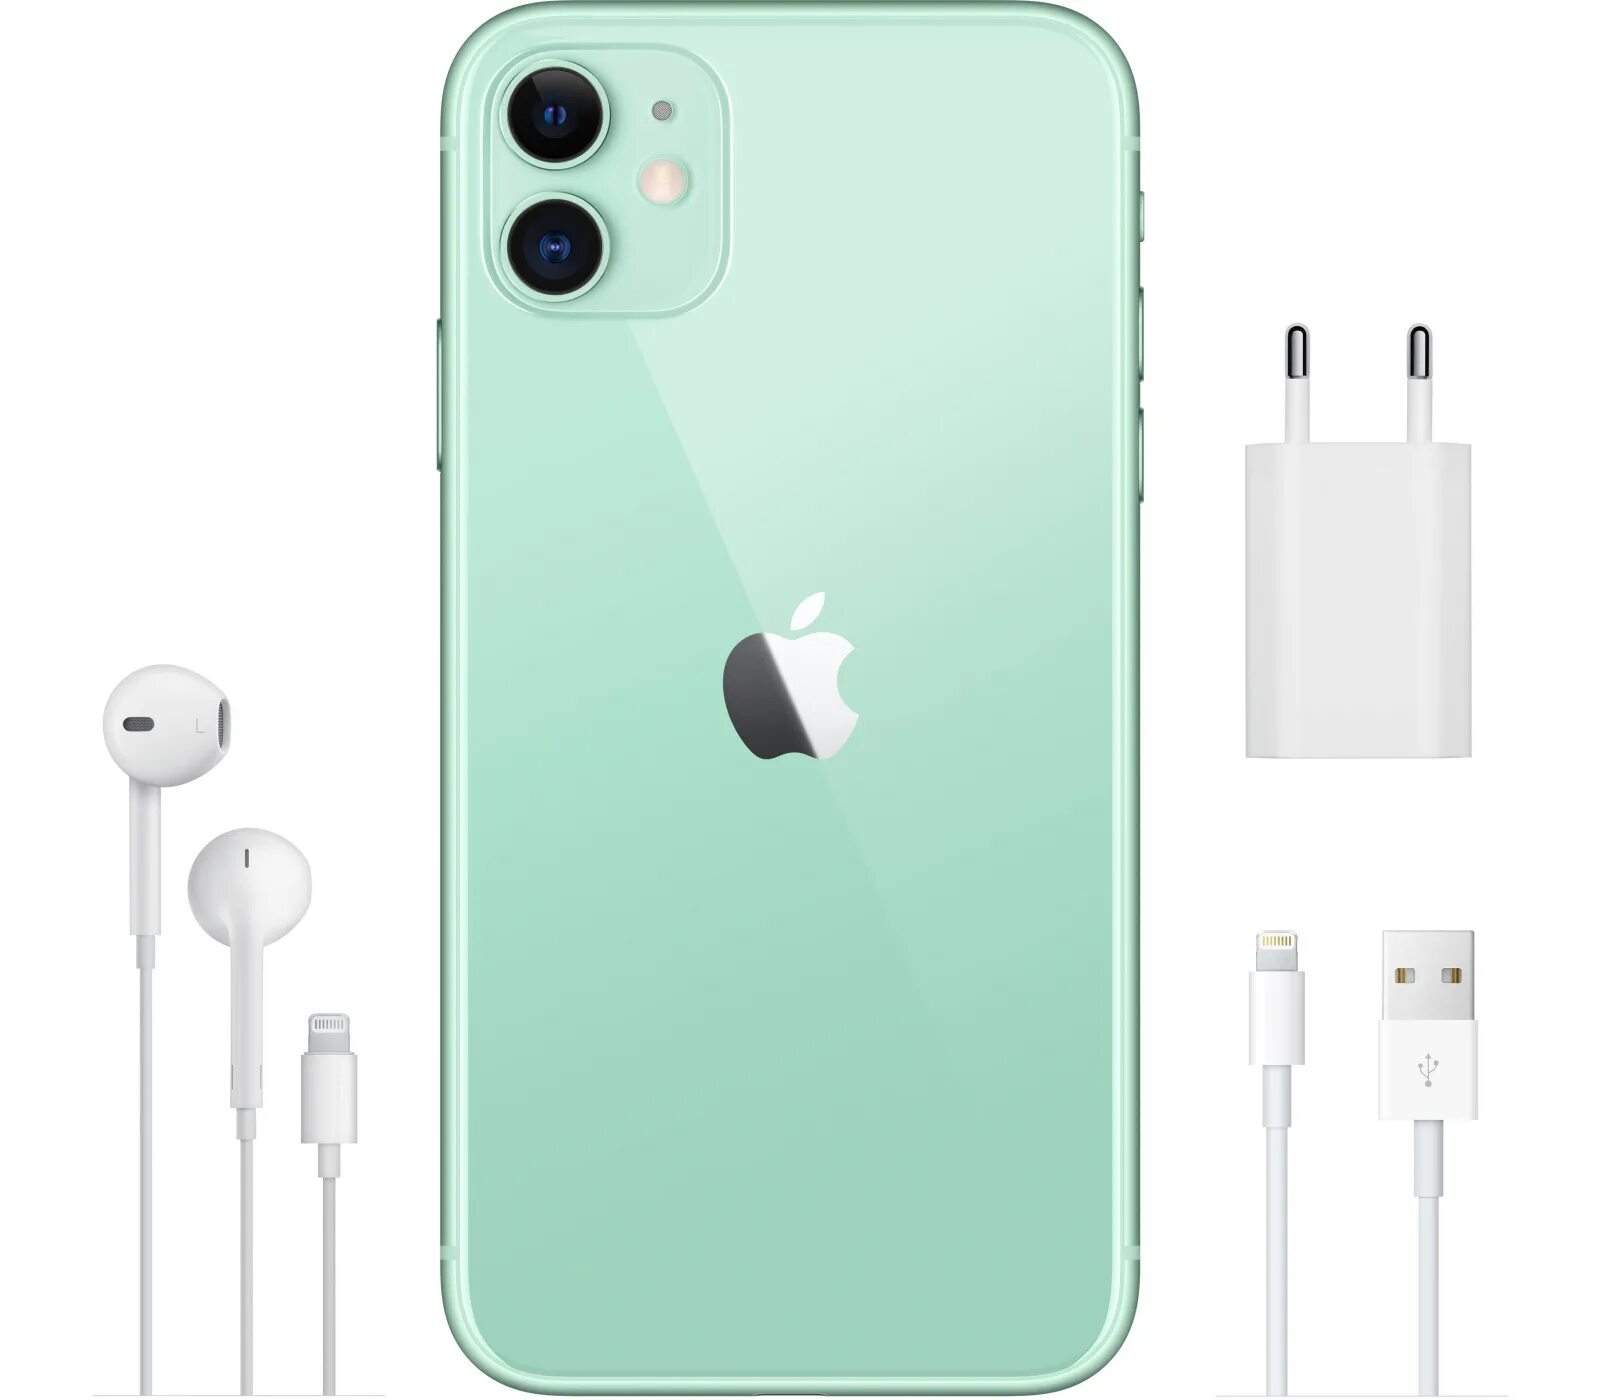 Айфон 11 цена в москве 128 оригинал. Apple iphone 11 64гб зелёный. Apple iphone 11 64gb. Apple iphone 11 64gb зеленый. Apple iphone 11 128gb Green.